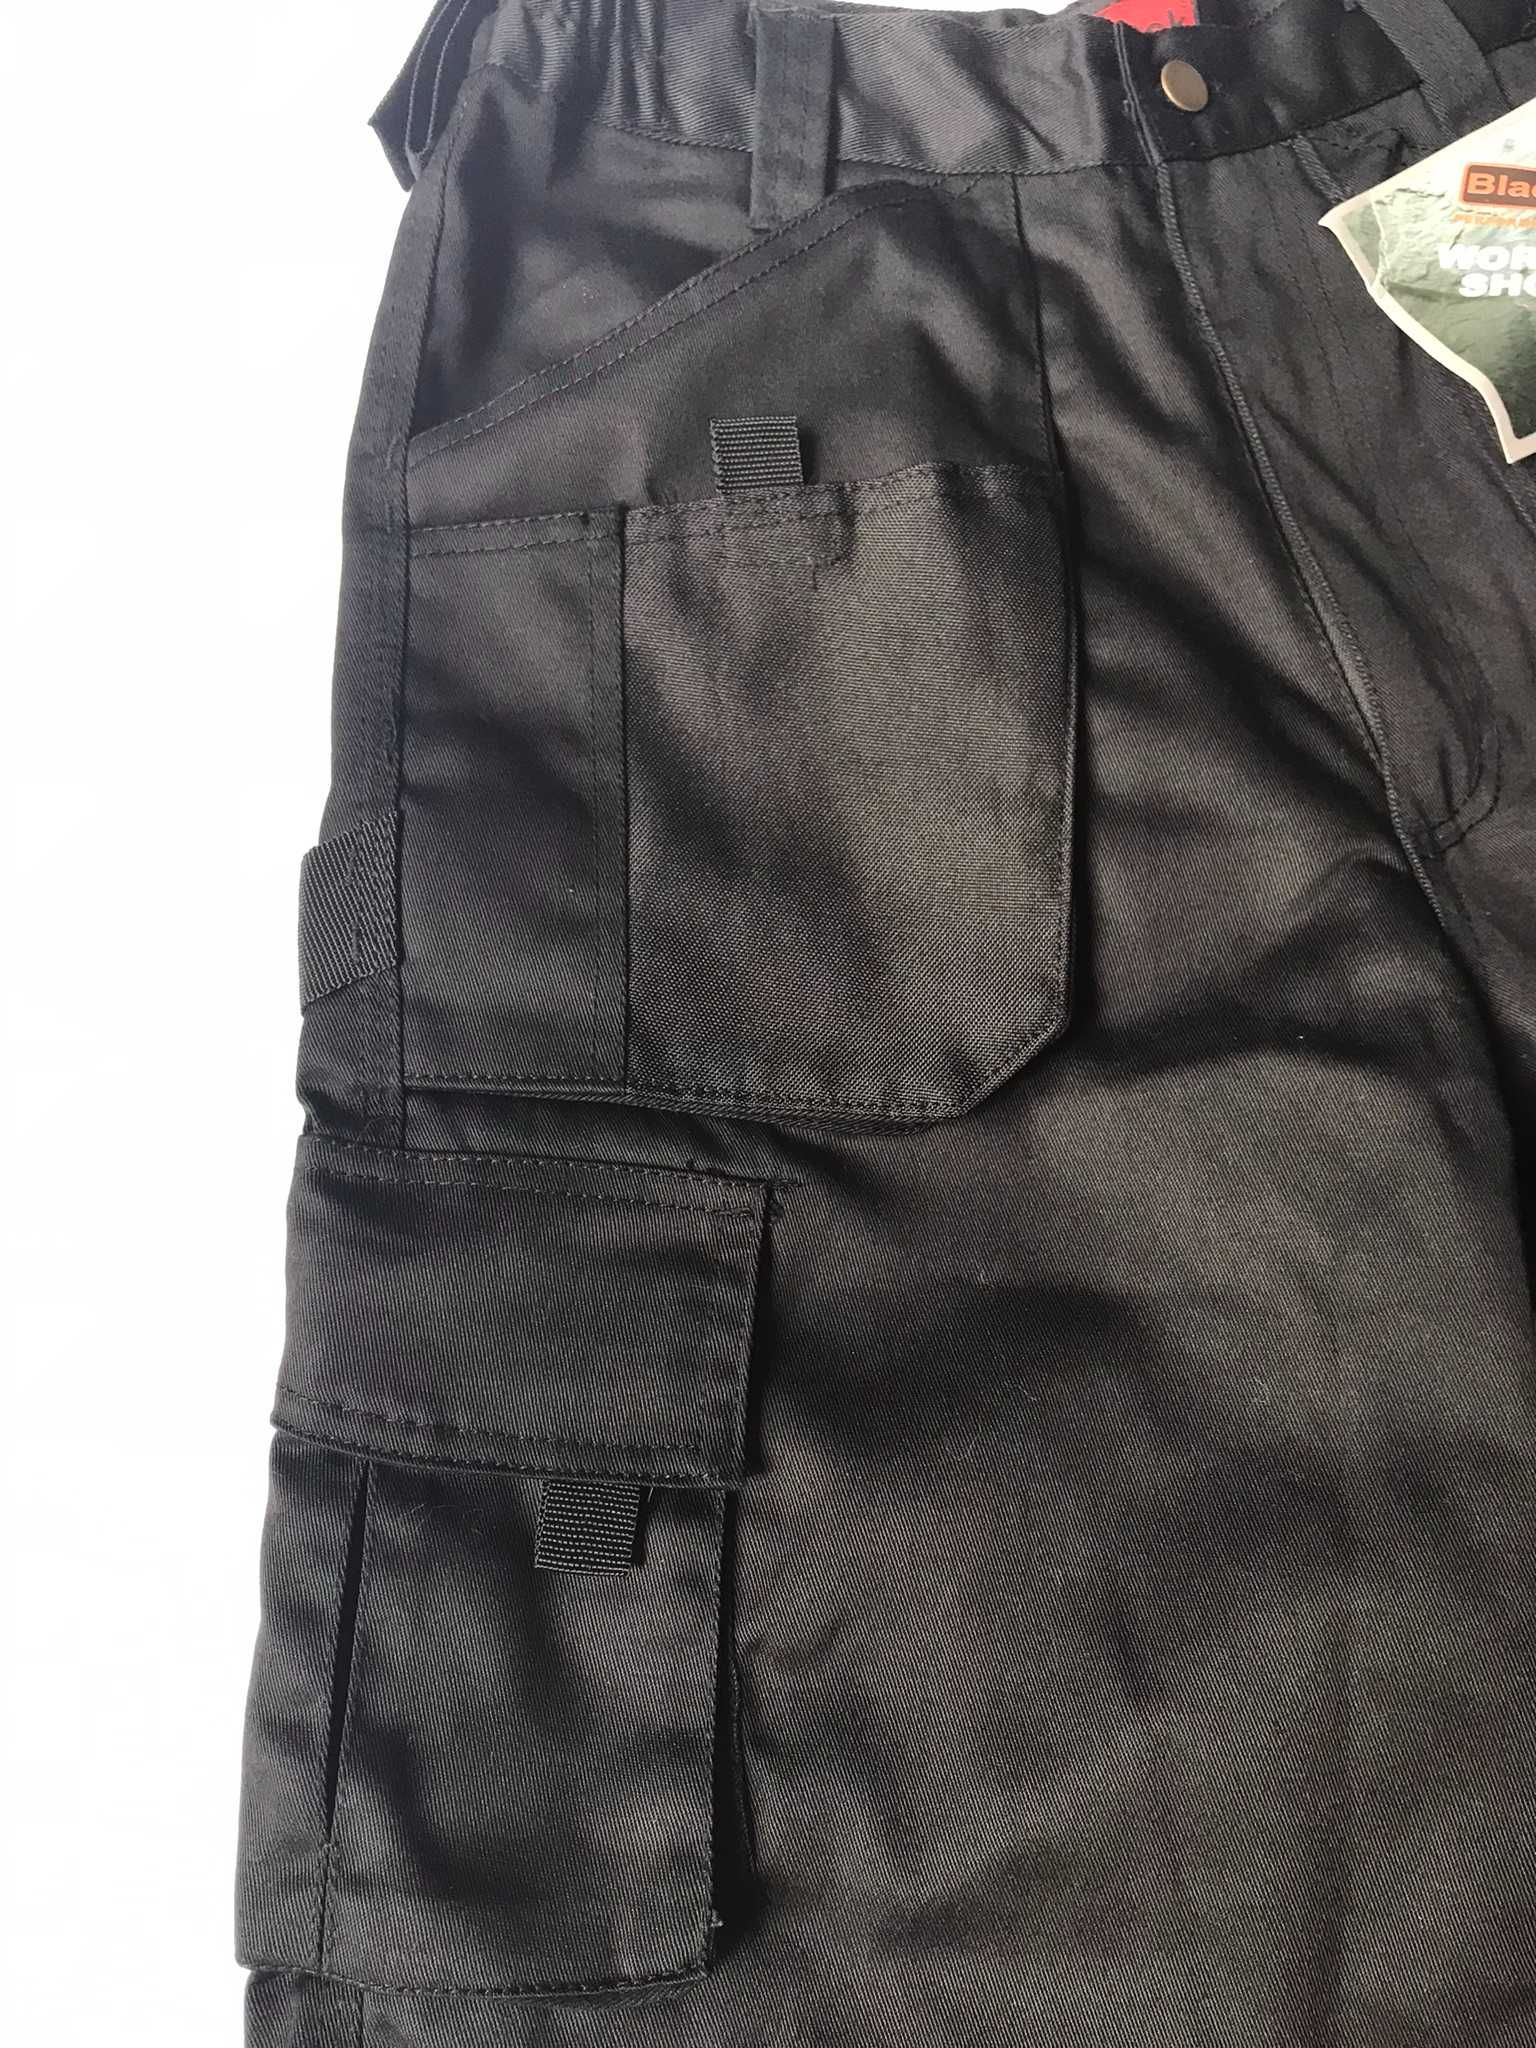 Работни шорти (къси панталони) тип карго - Blackrock